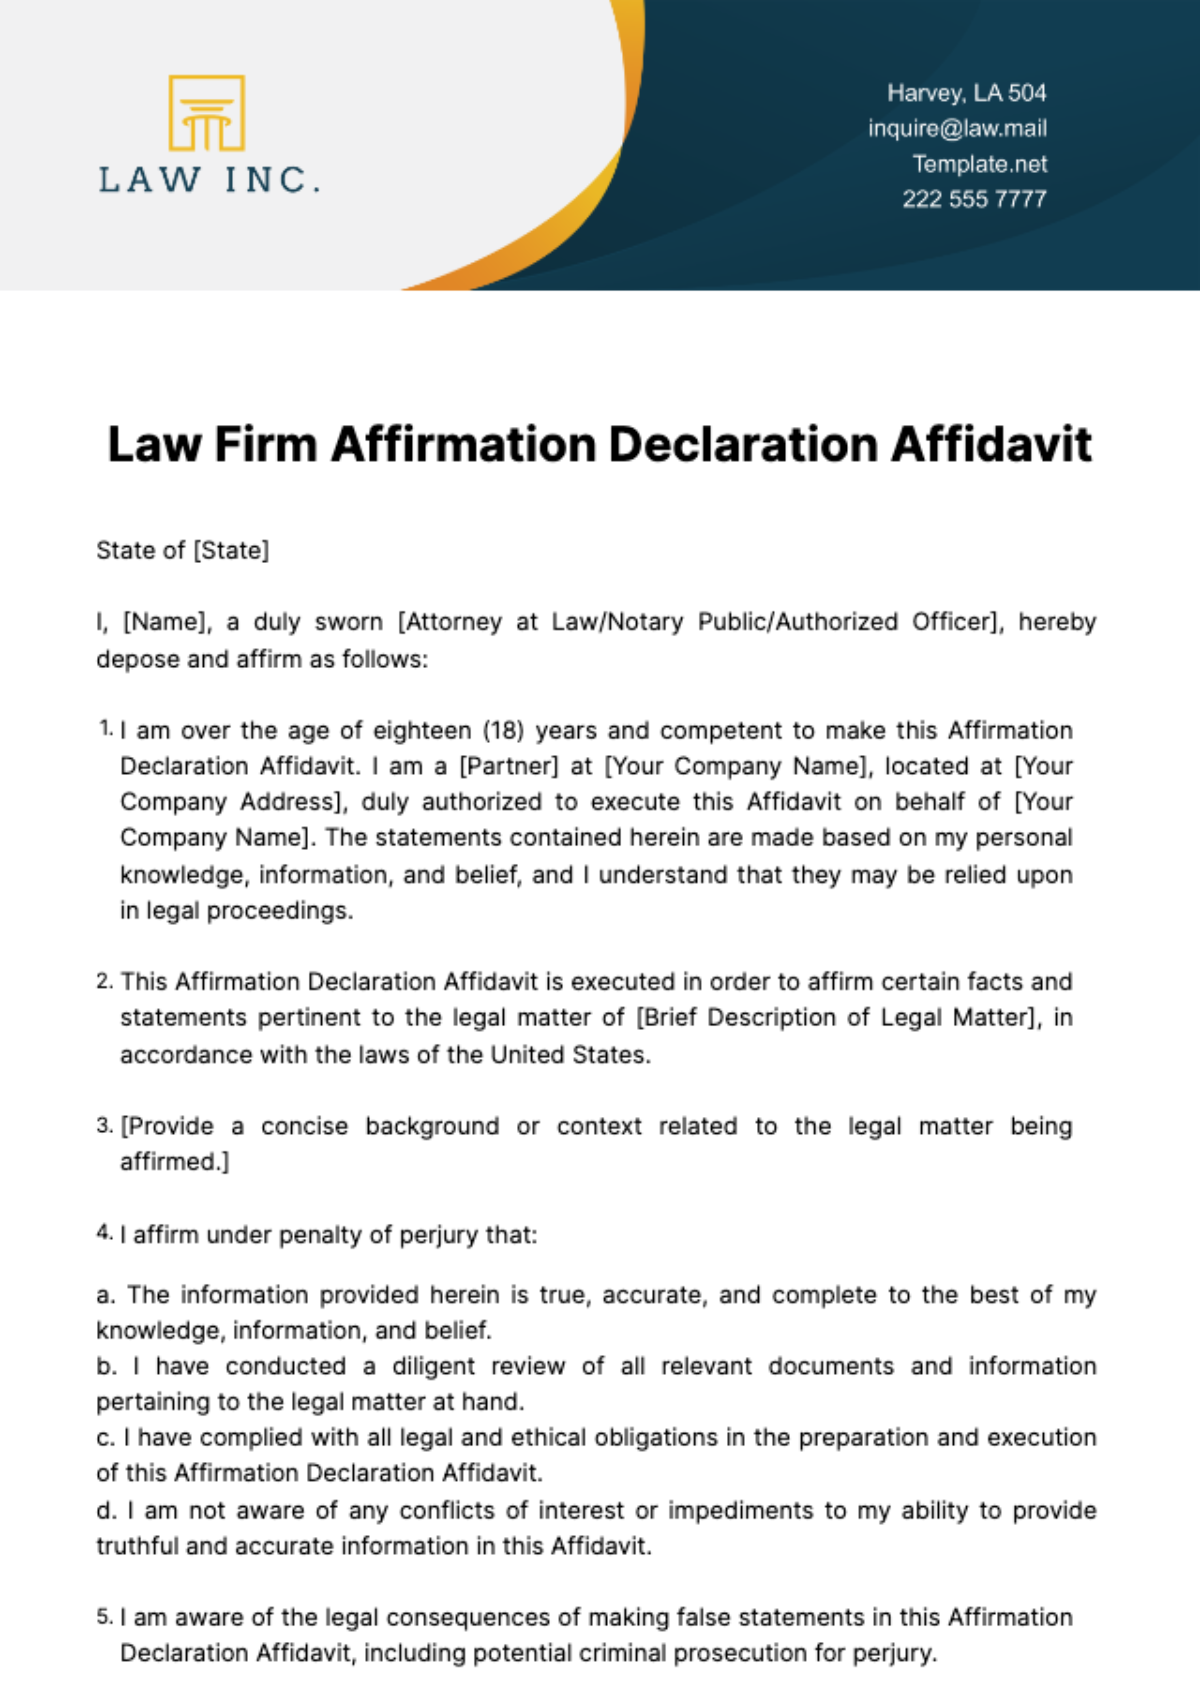 Law Firm Affirmation Declaration Affidavit Template